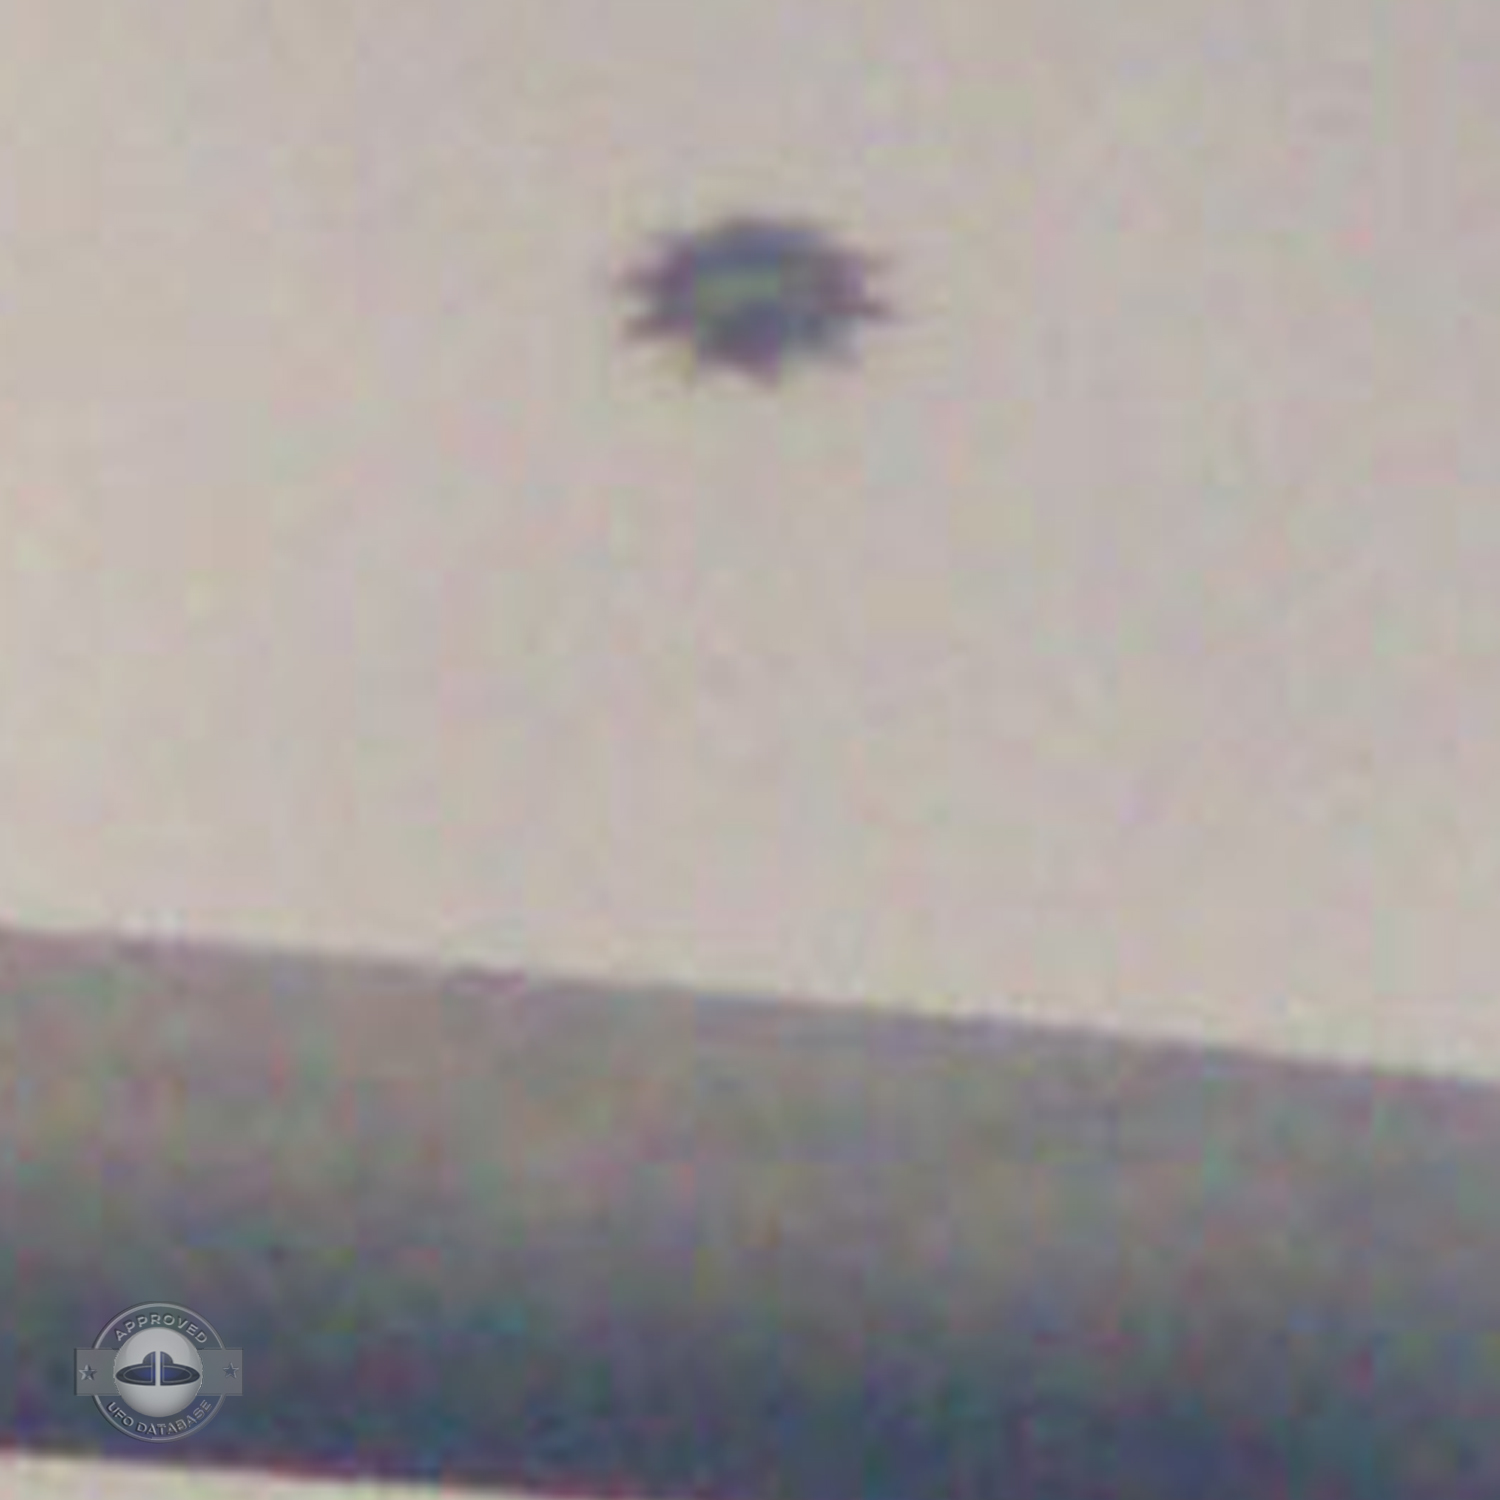 Very Rare UFO shaped like a Sprocket - Sao Bernardo Do Campo, Brazil UFO Picture #225-4